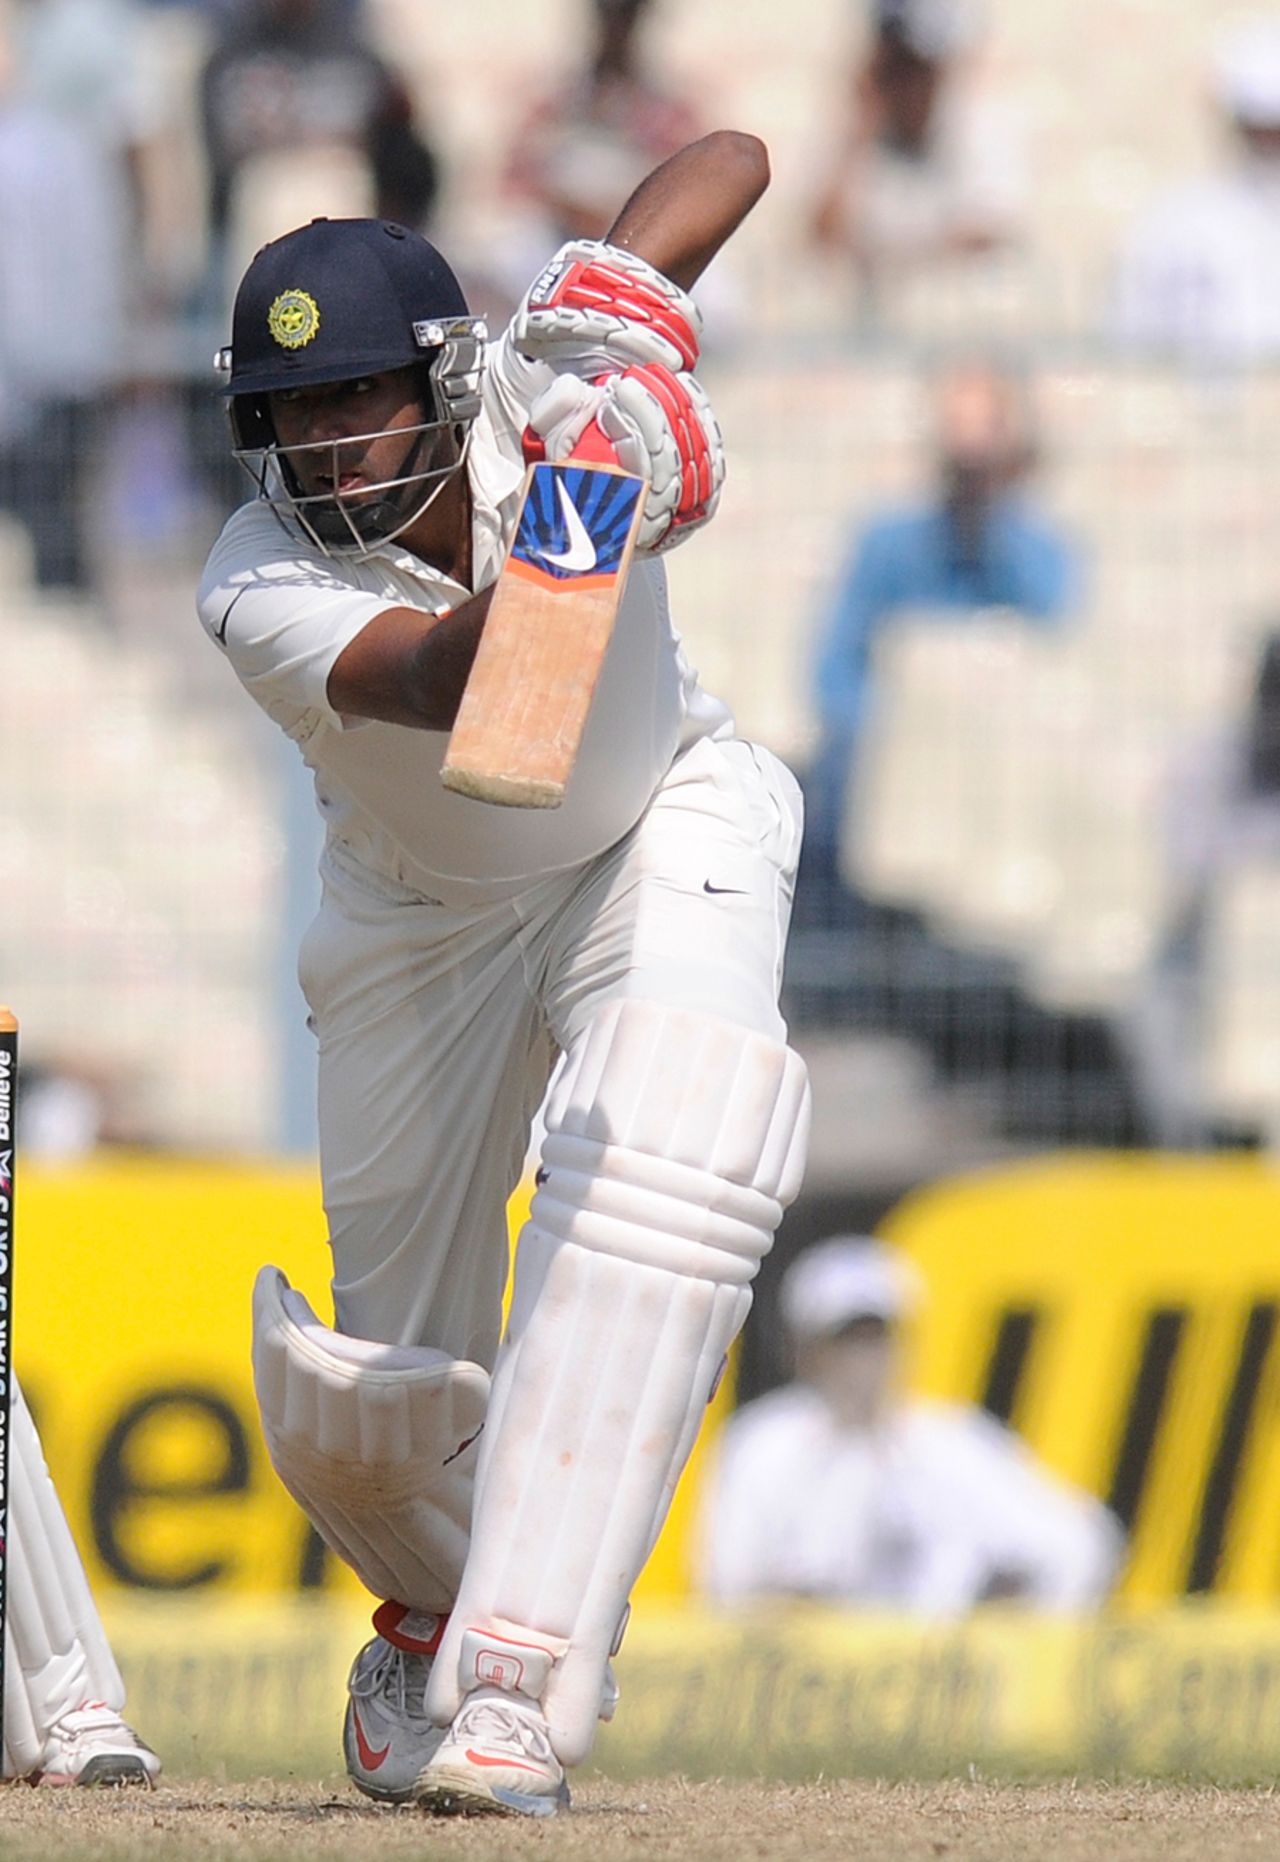 R Ashwin drives on his way to a century, India v West Indies, 1st Test, Kolkata, 3rd day, November 8, 2013